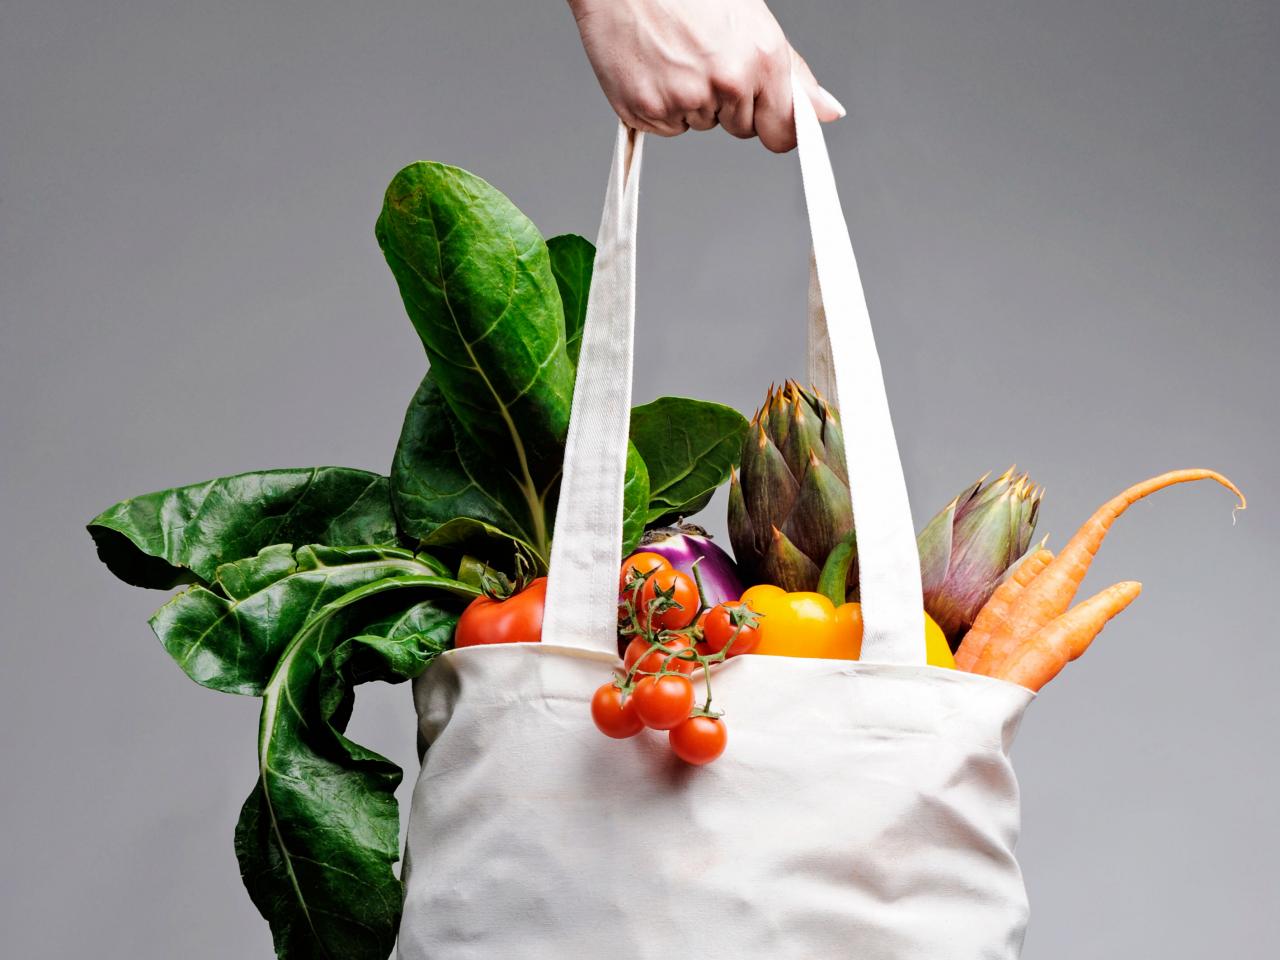 Bluapple Review - Fruits Vegetables Last Longer